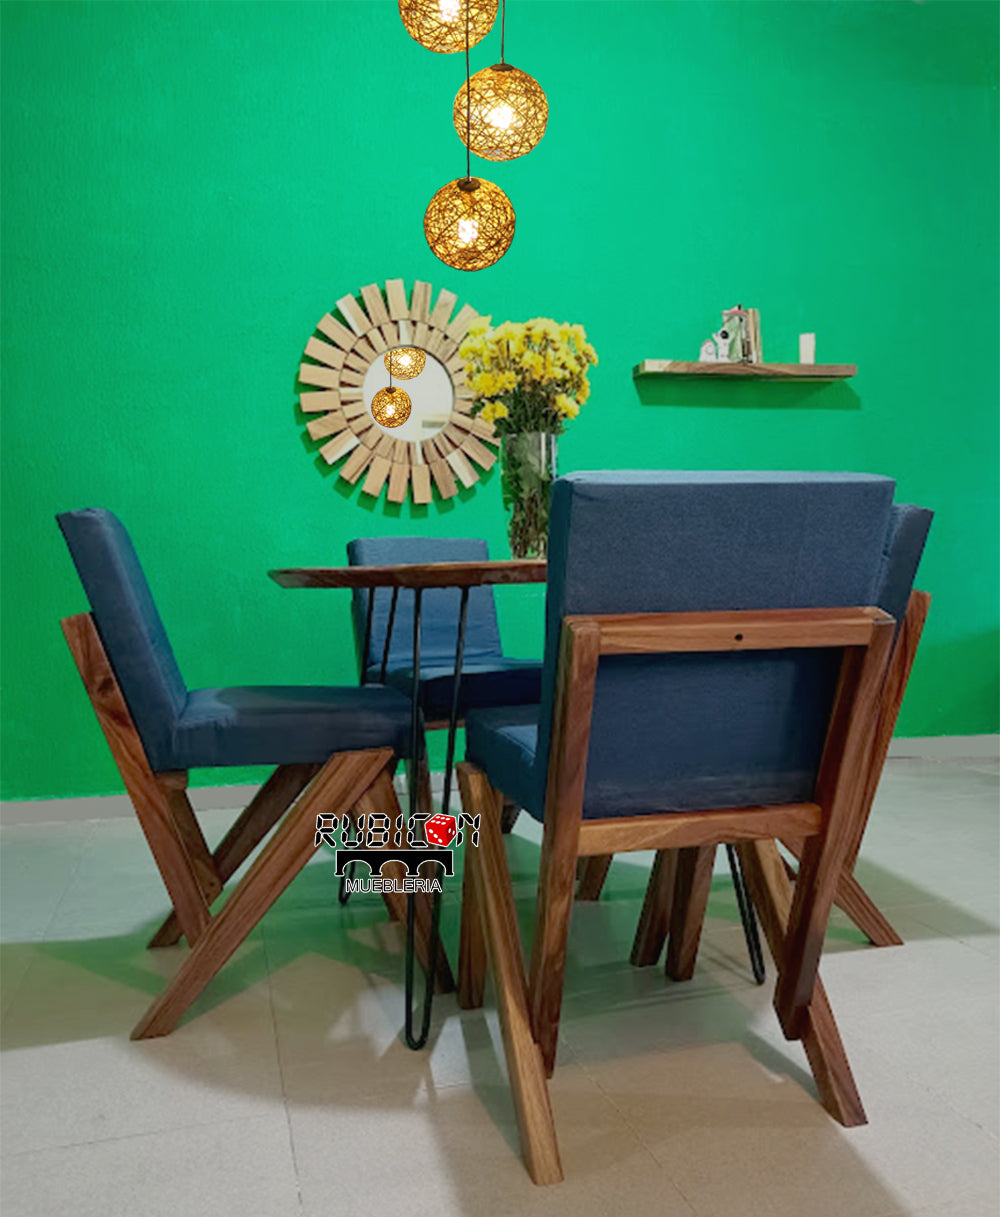 Comedor redondo de madera de parota con sillas tapizadas estilo industrial mod, Odiseo